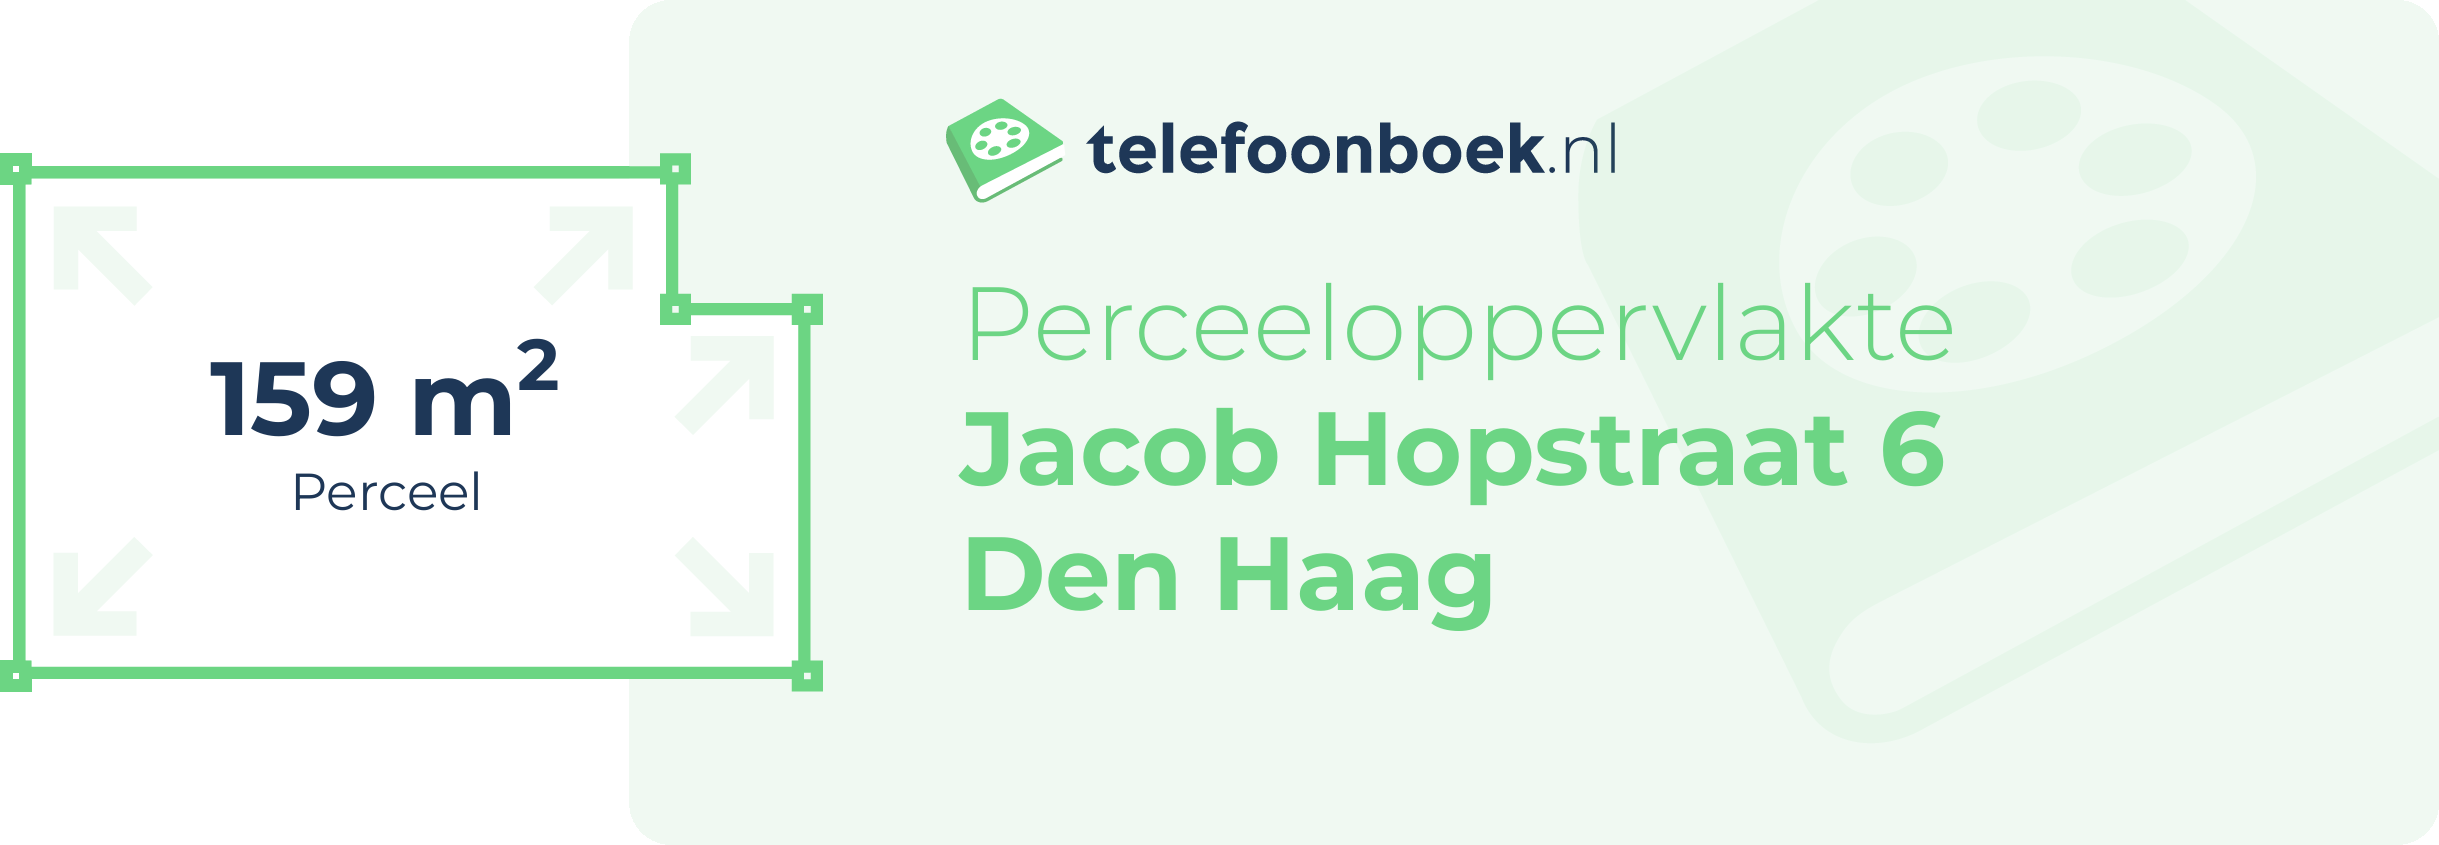 Perceeloppervlakte Jacob Hopstraat 6 Den Haag